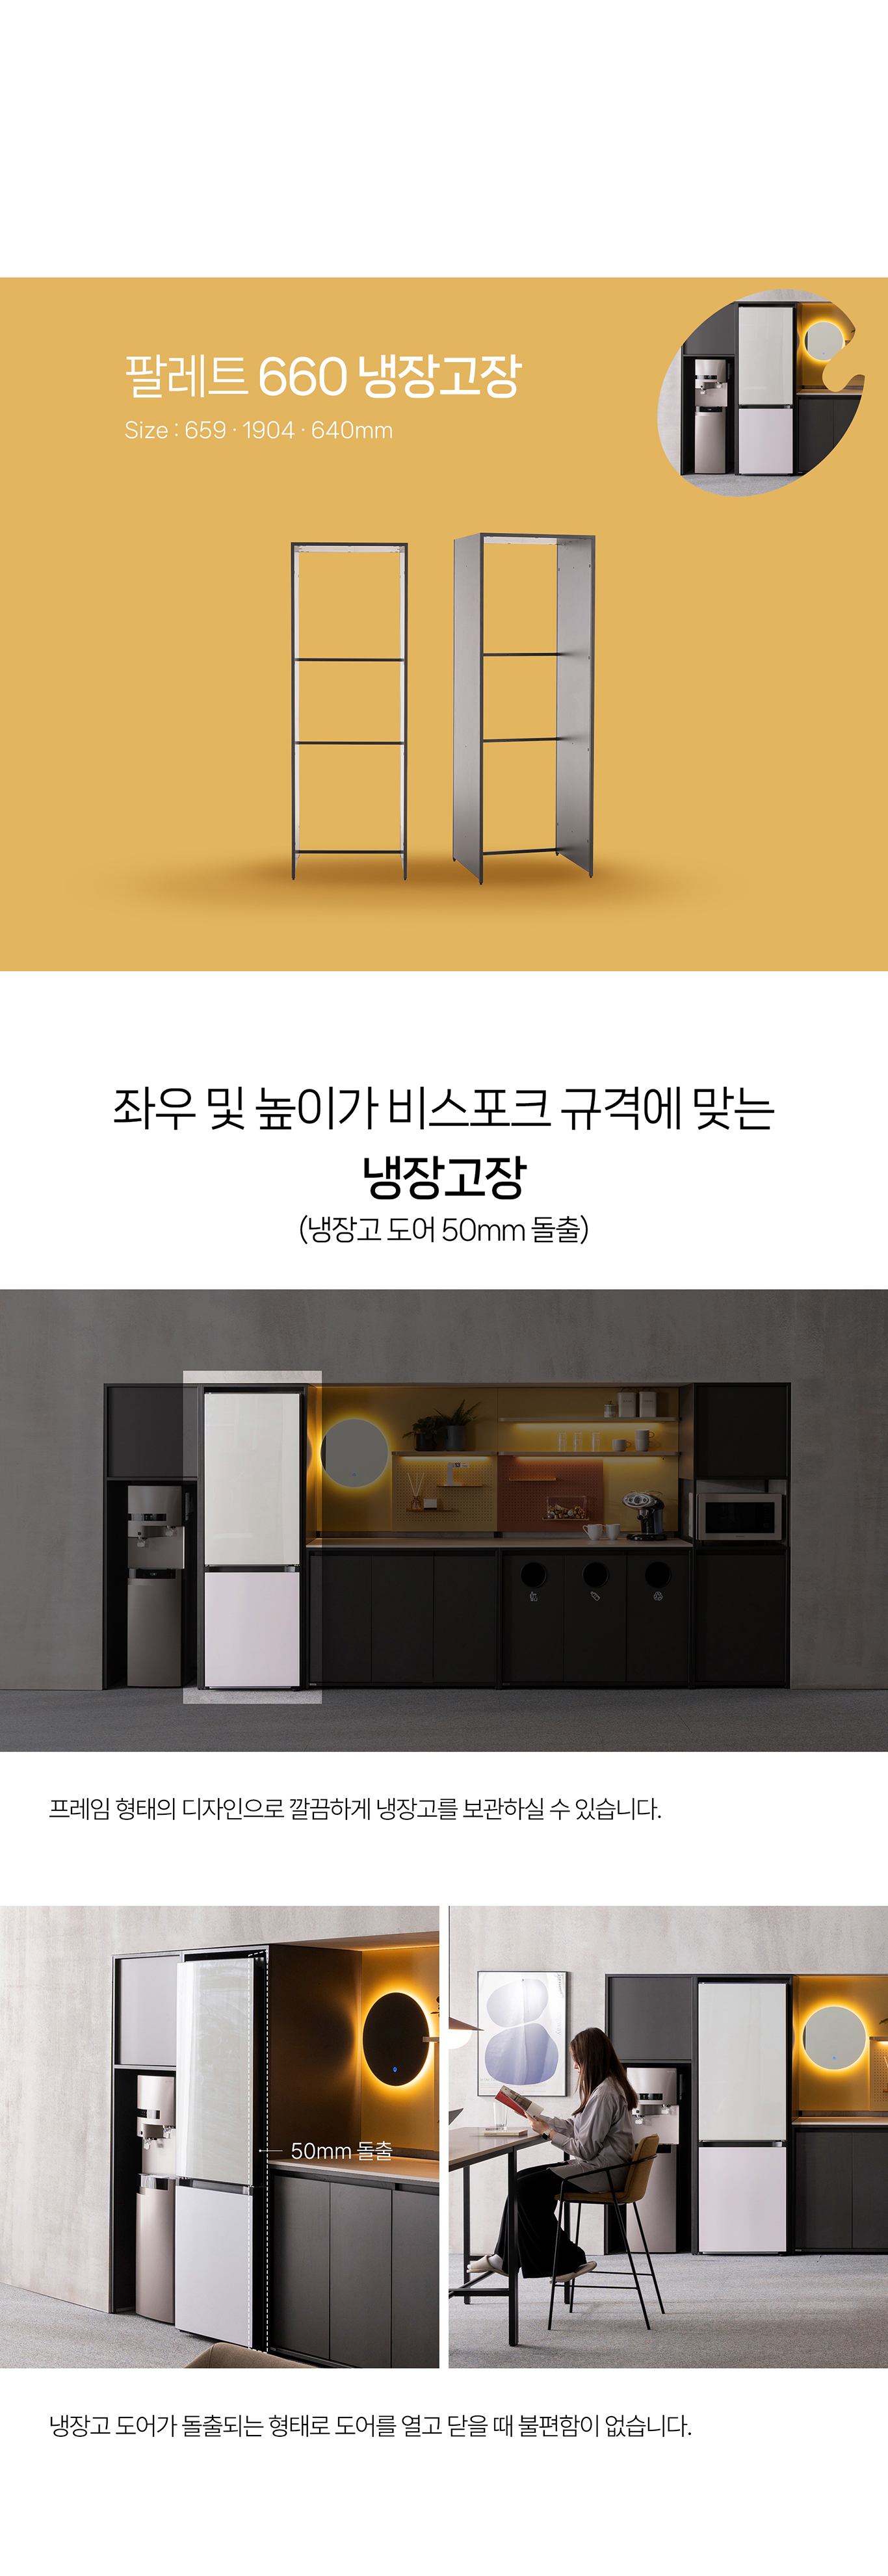 refrigeratorcabinet_1.jpg